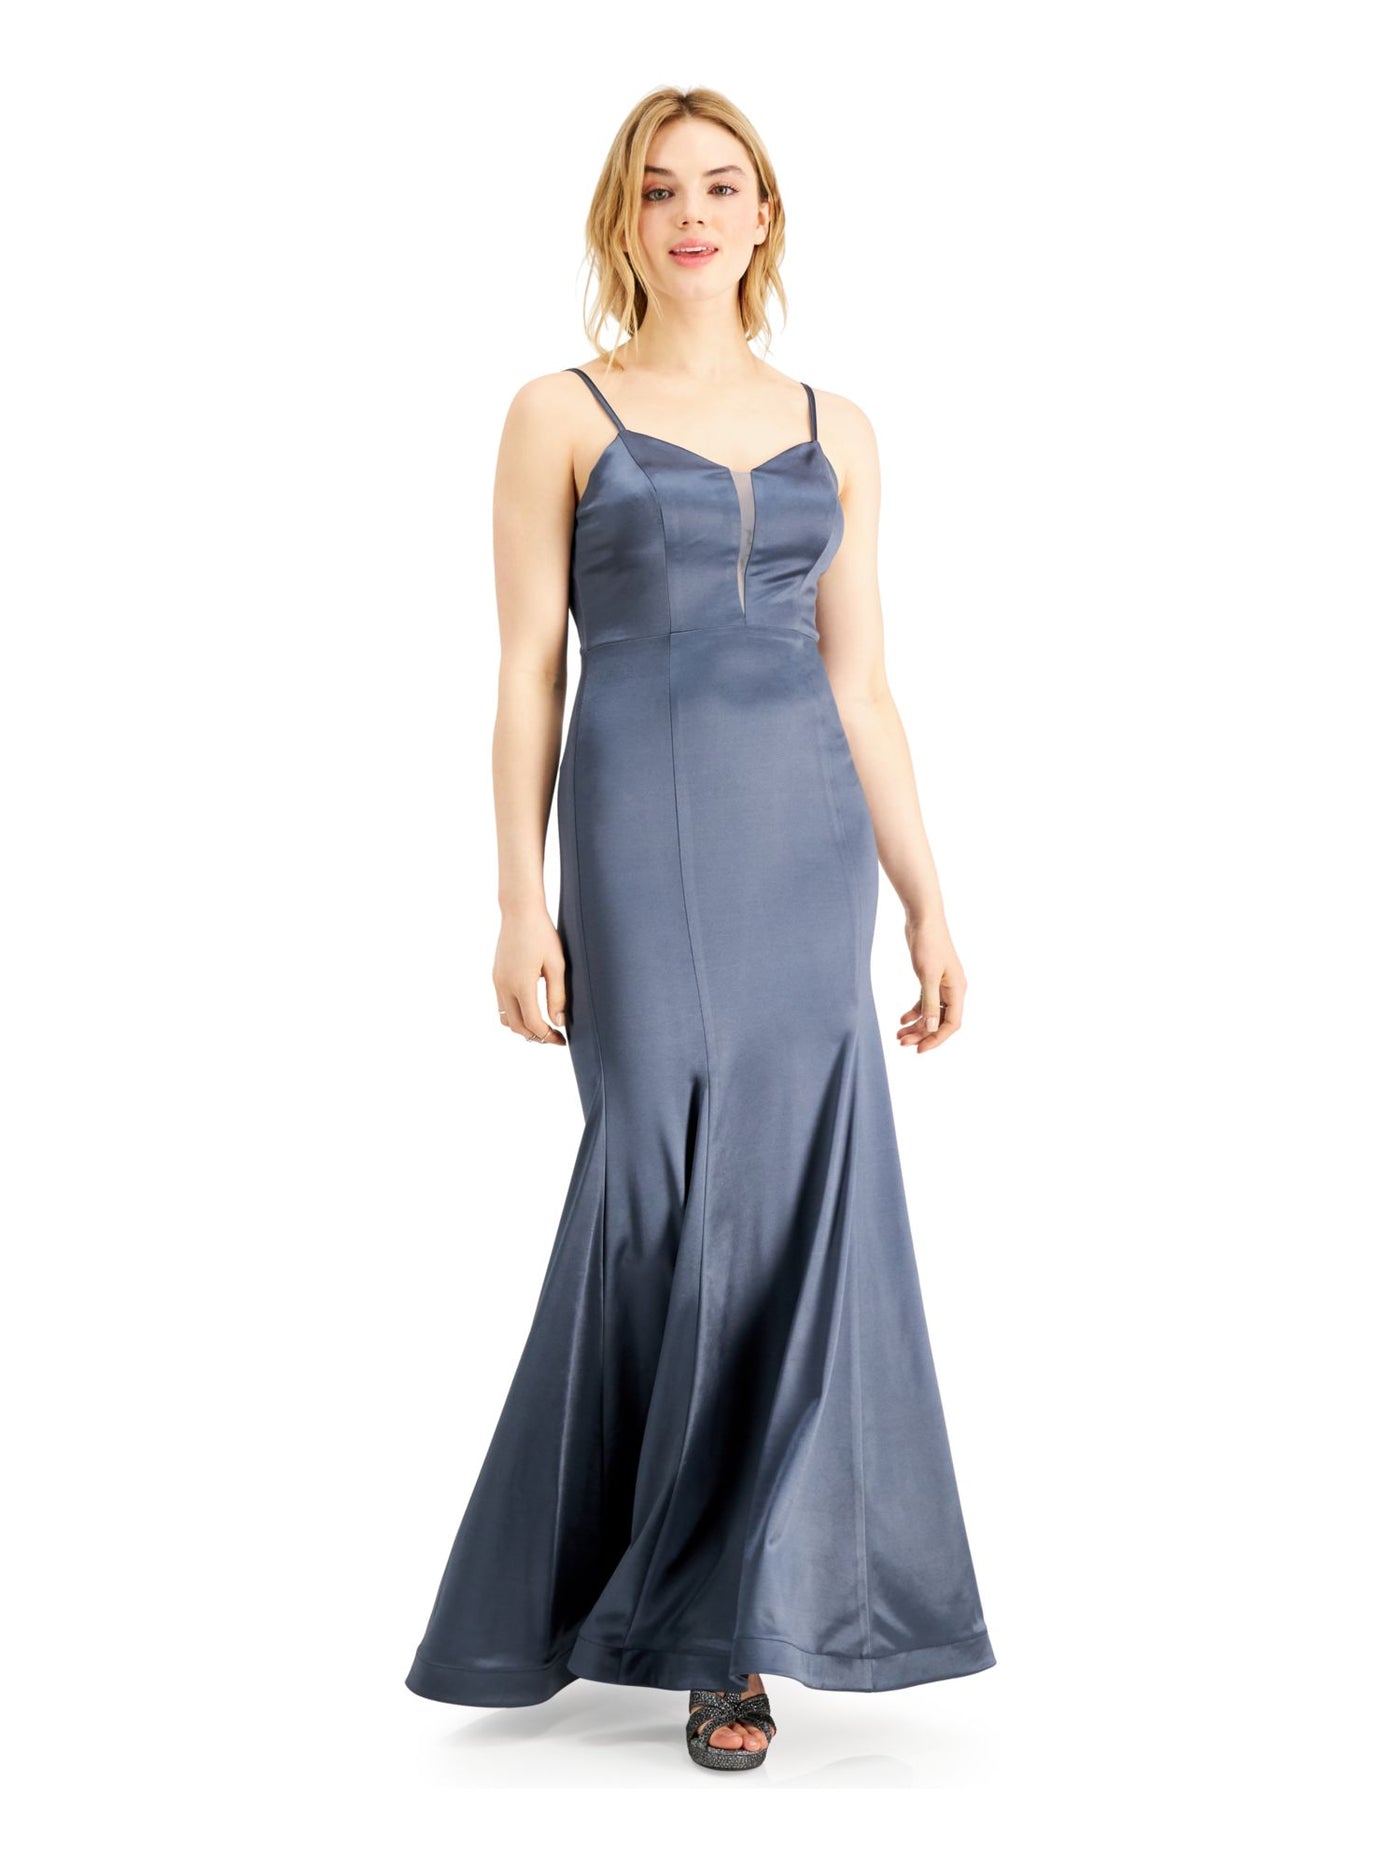 TEEZE ME Womens Rhinestone Embellished Back Spaghetti Strap Sweetheart Neckline Full-Length Formal Mermaid Dress